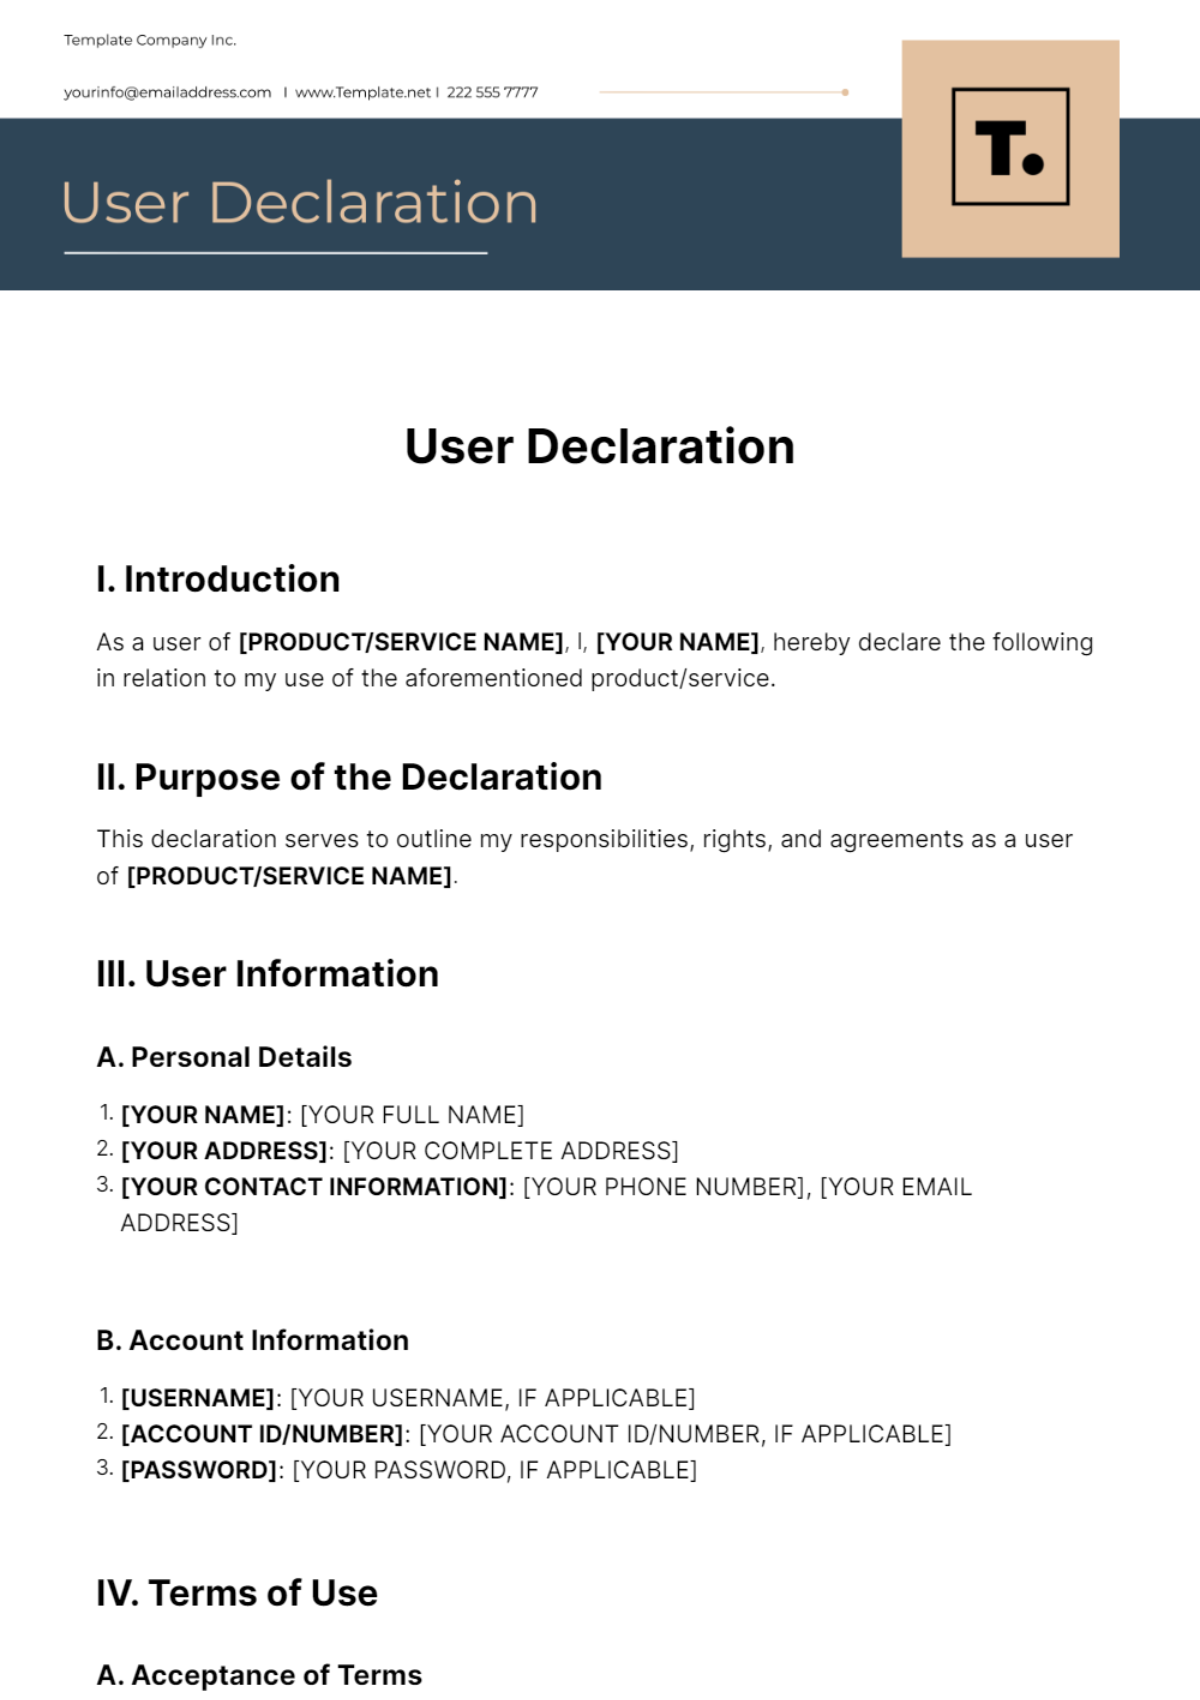 User Declaration Template